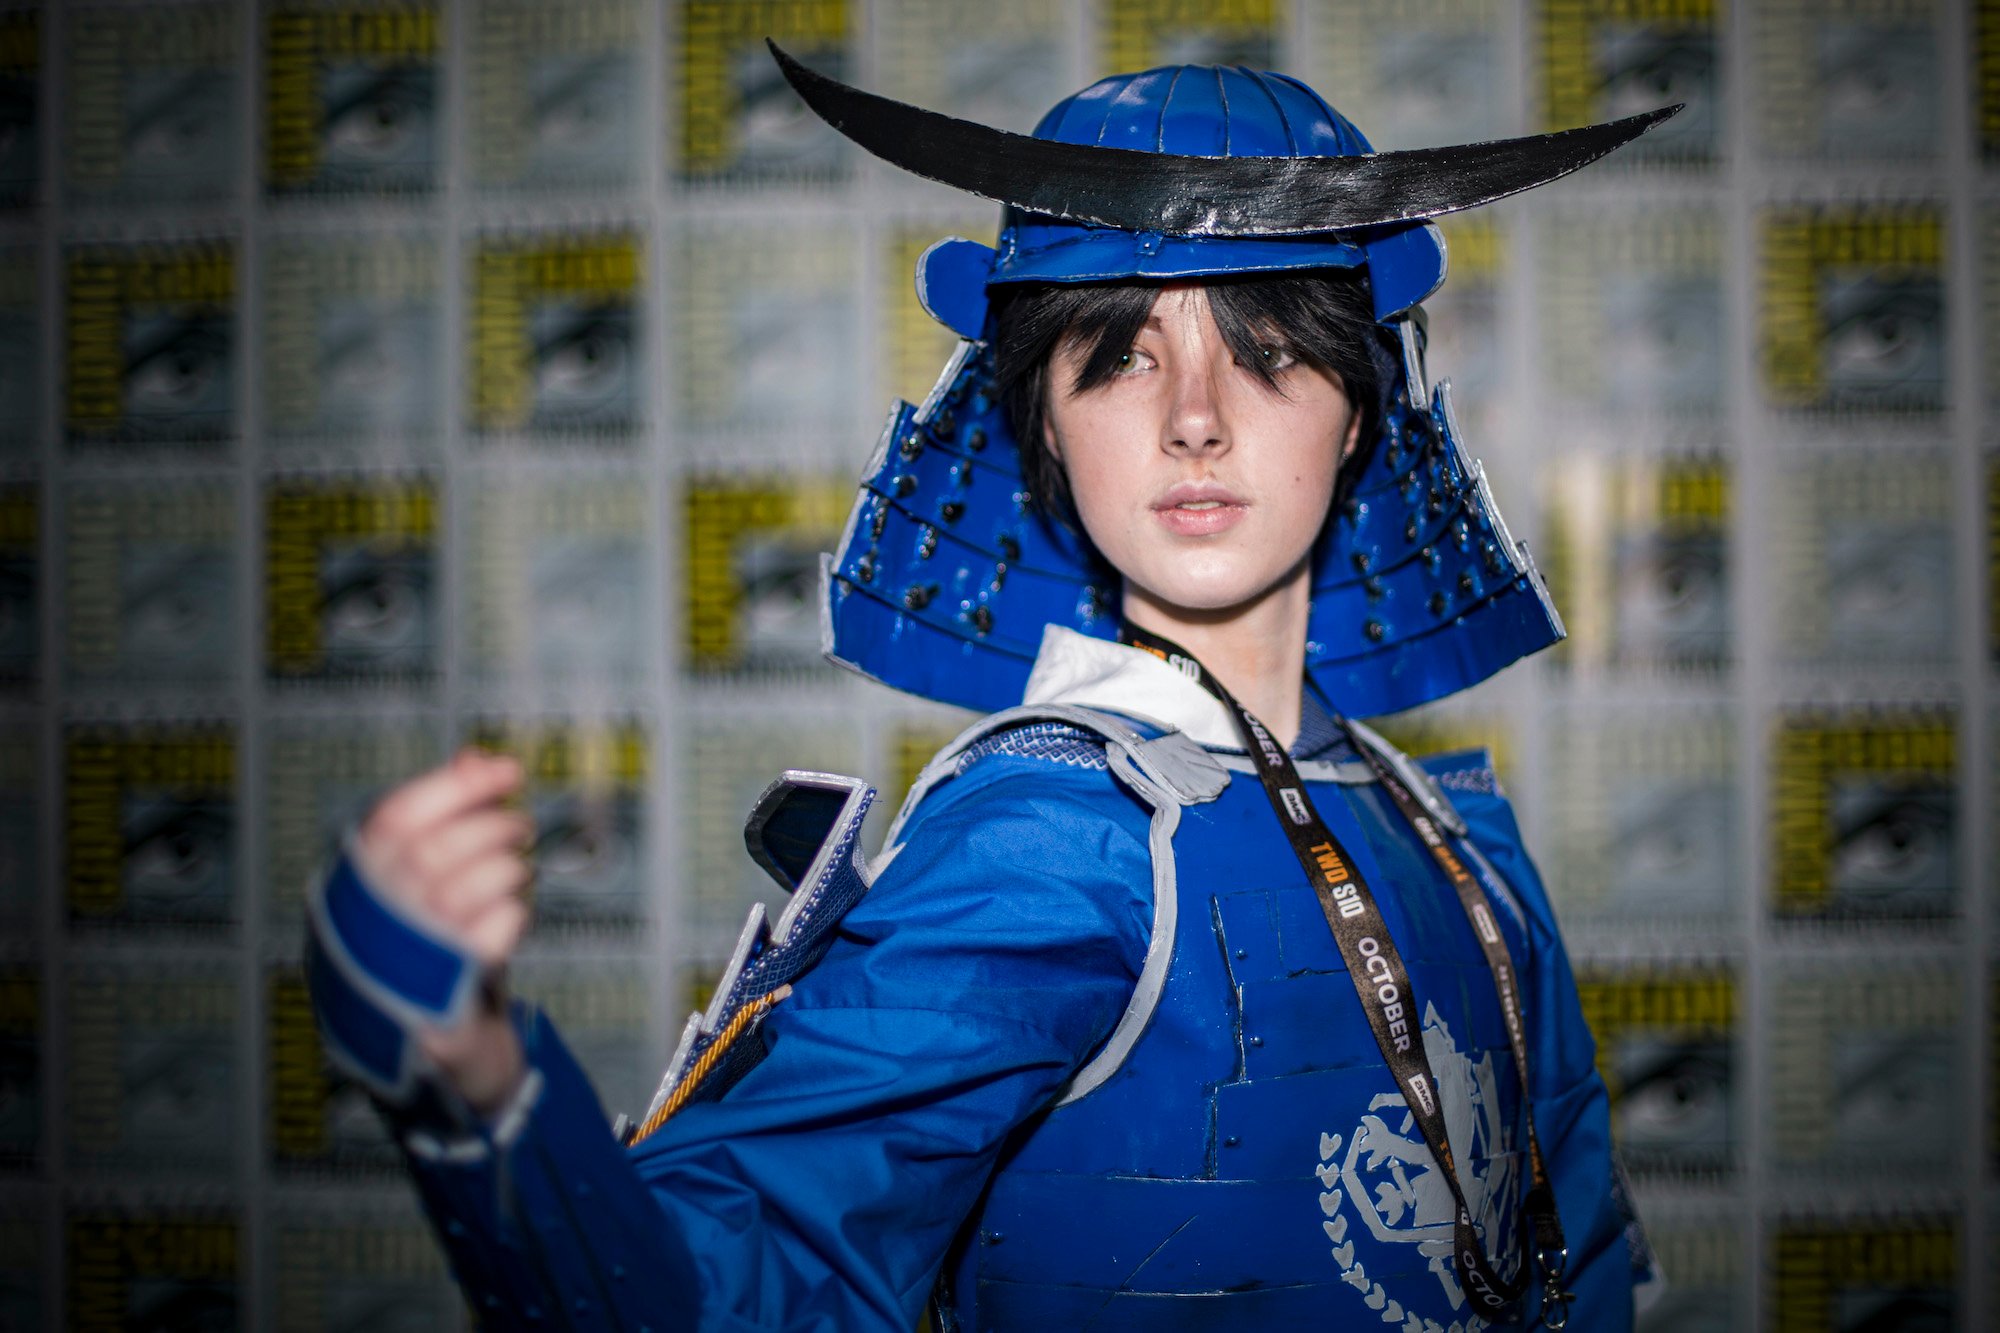 Cosplayer Margaret Smith as Samurai Roy Mustang from "Fullmetal Alchemist"